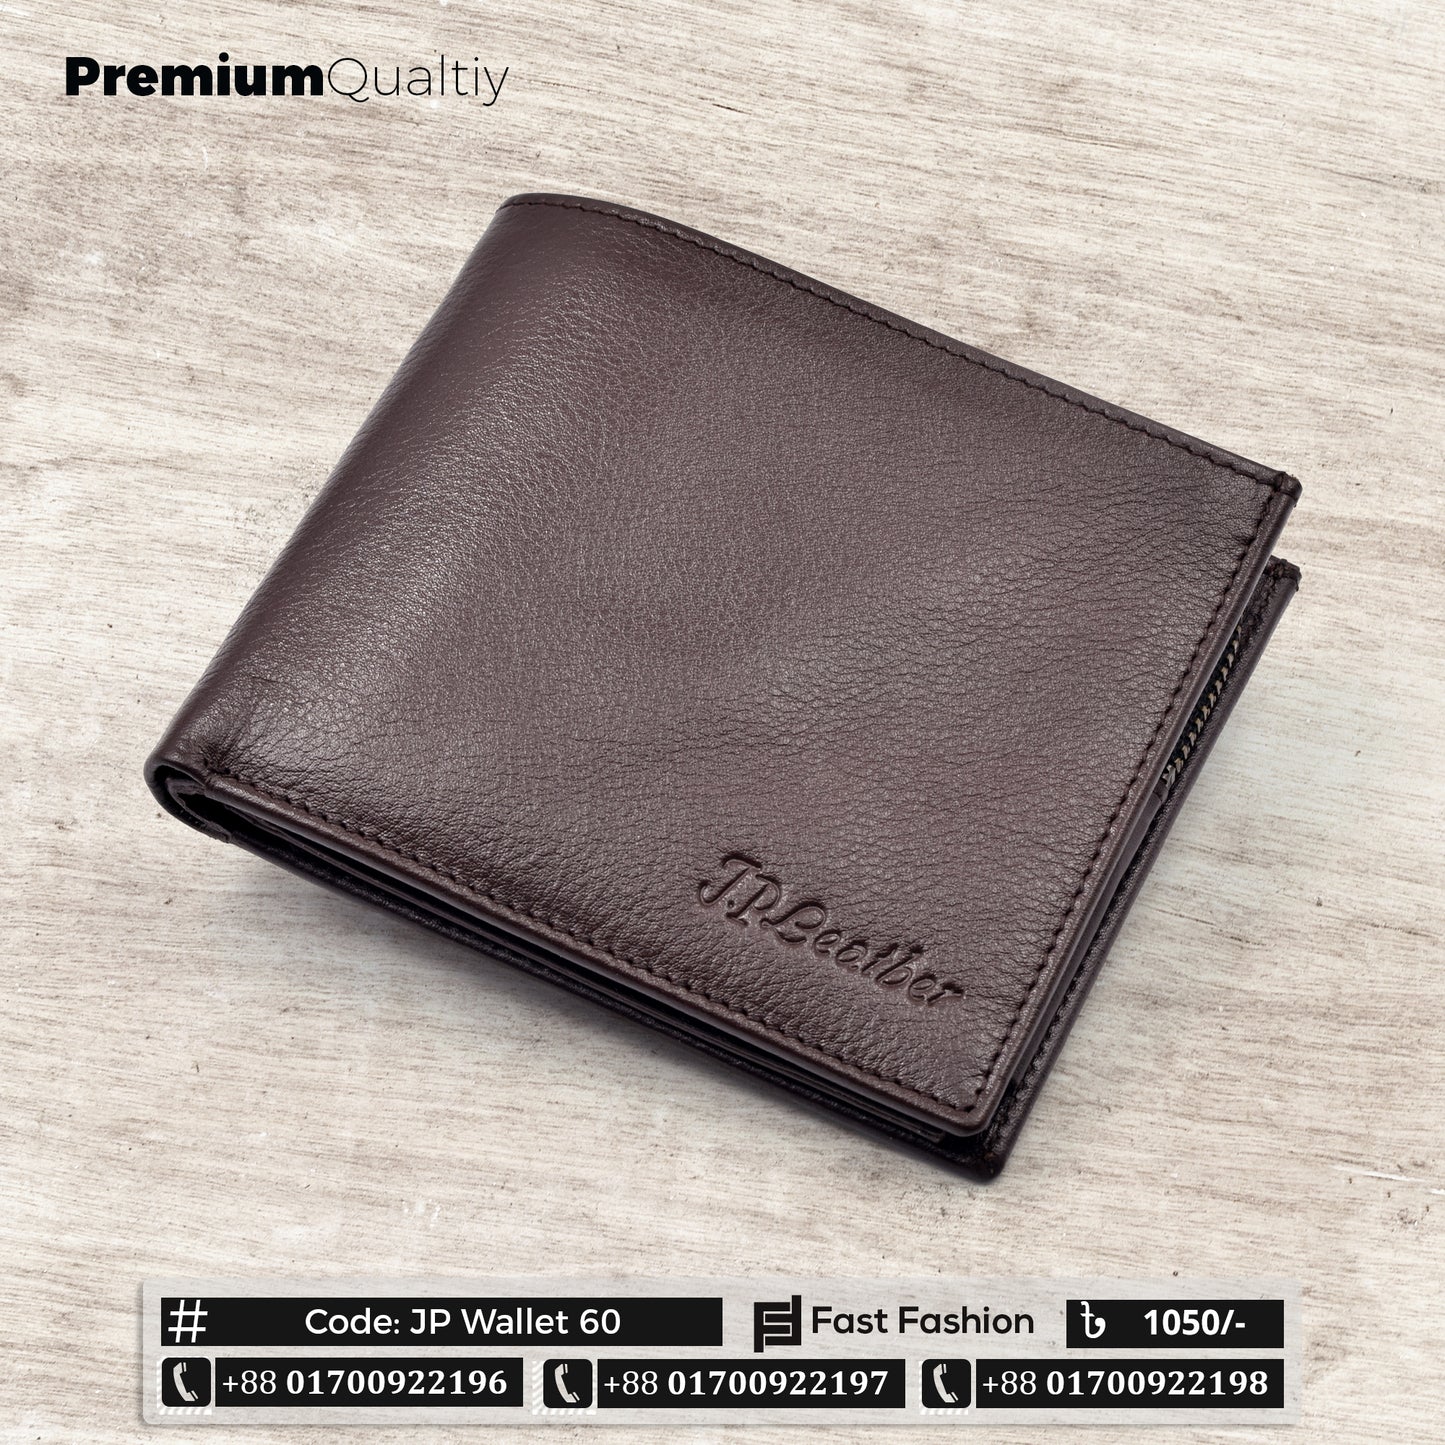 Original Leather Pocket Size Premium Quality Wallet | JP Wallet 60